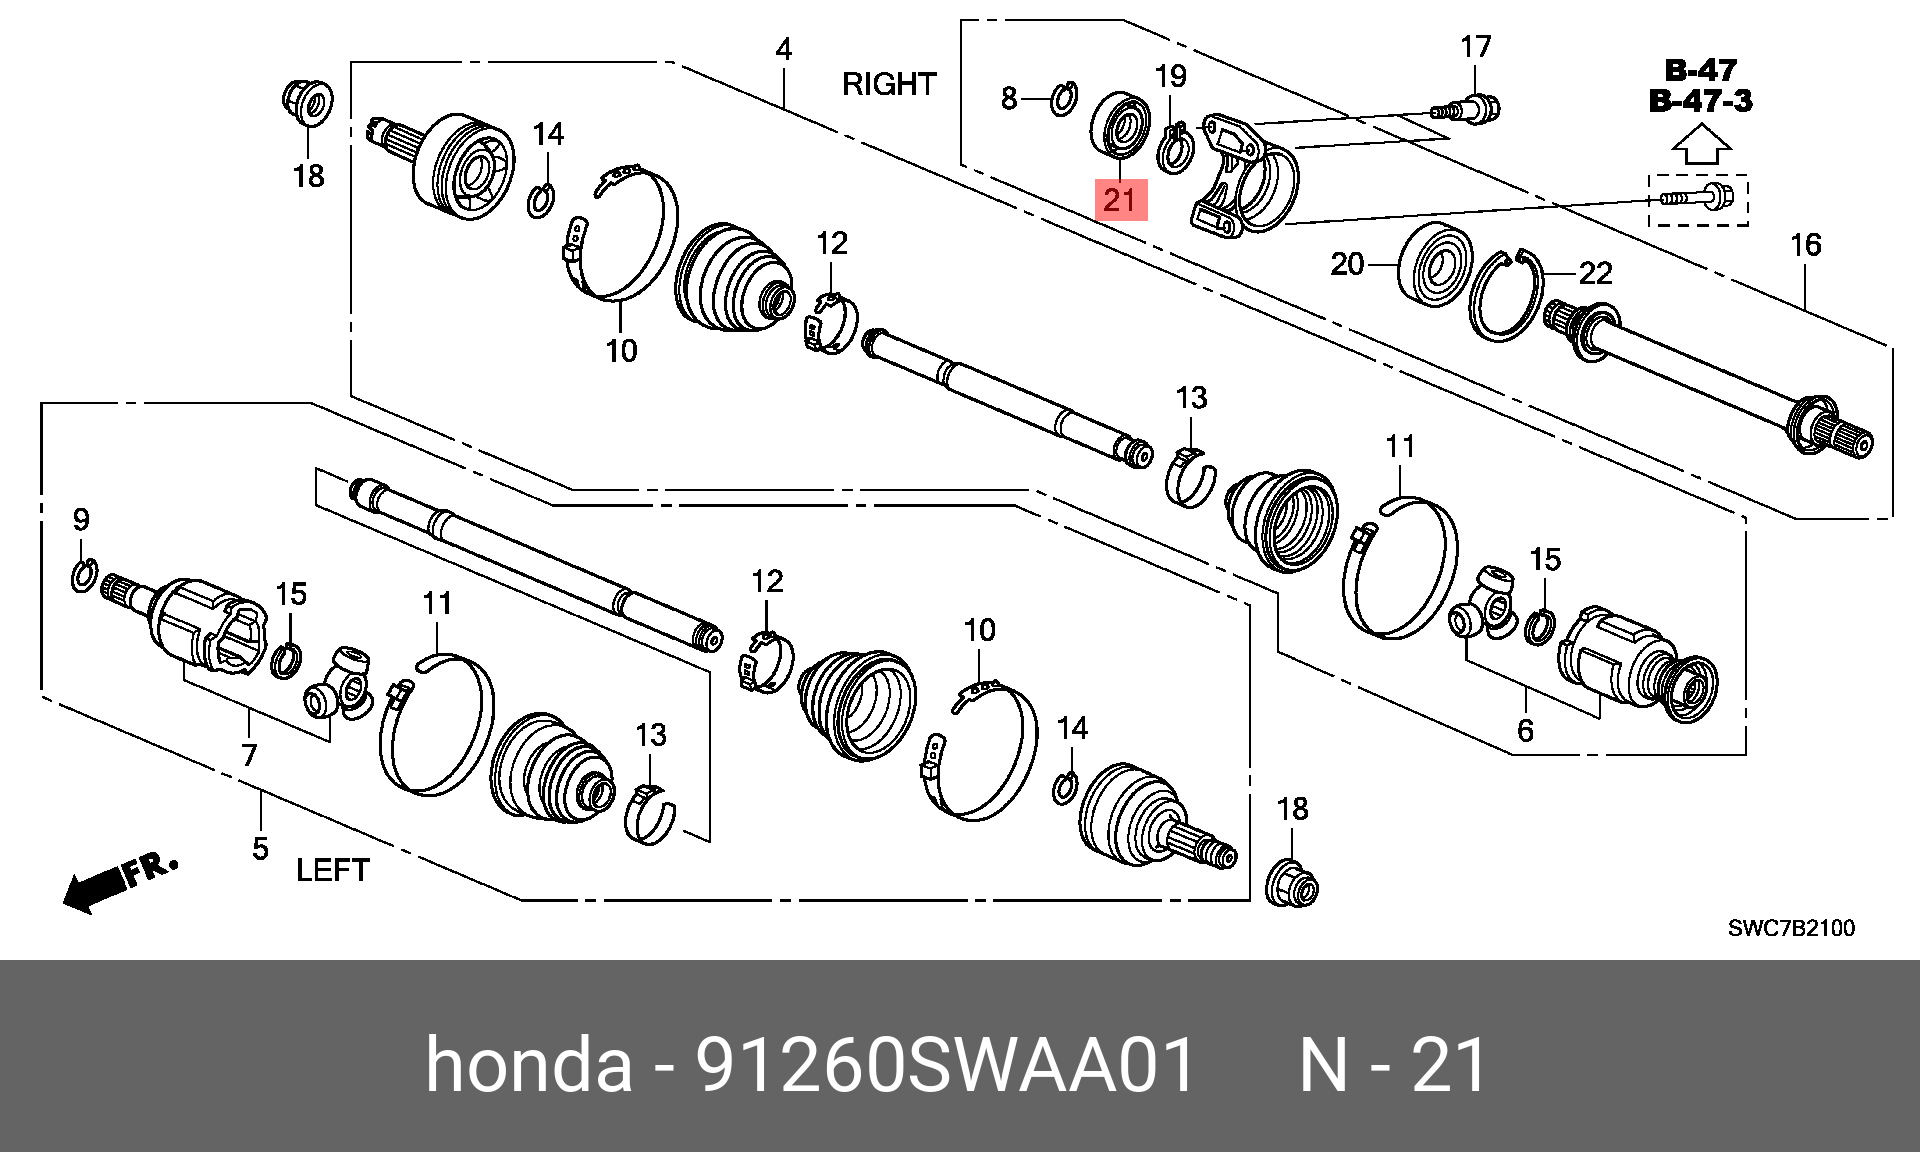 Honda передний привод. Хонда CR V rd1 привод передний левый схема. Сальник привода Хонда ЦРВ 2008. 91260-SWA-a01. Подшипник привода промежуточный Хонда.